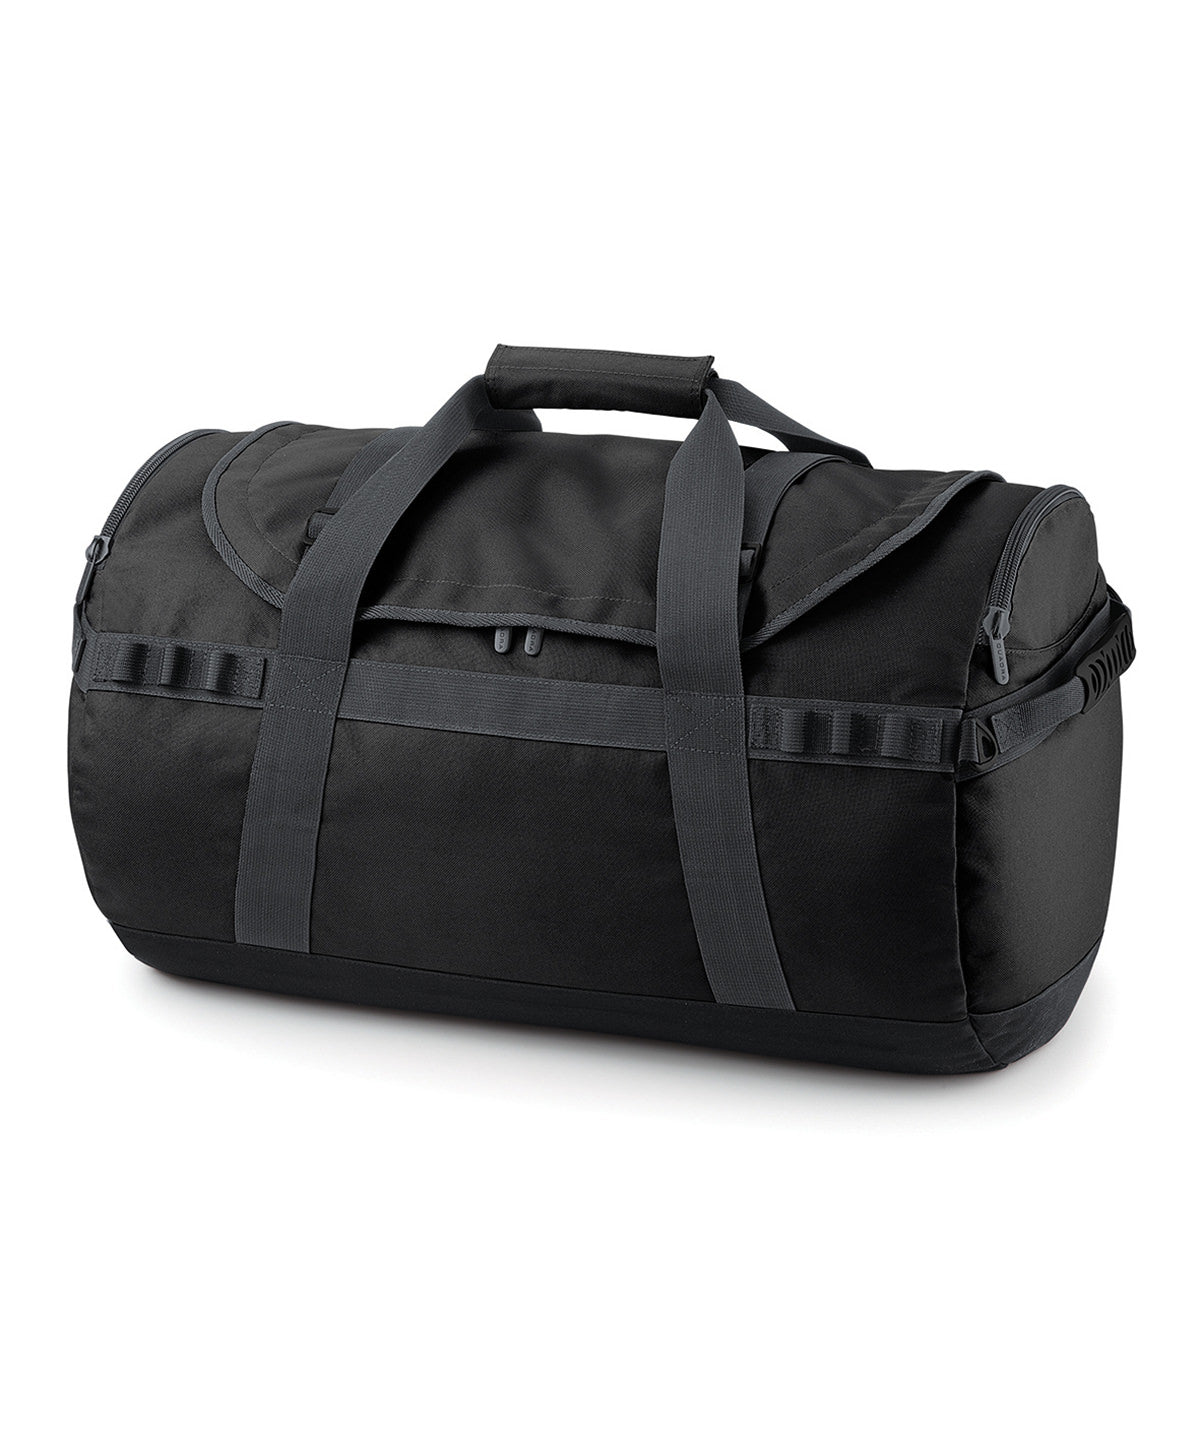 Töskur - Pro Cargo Bag